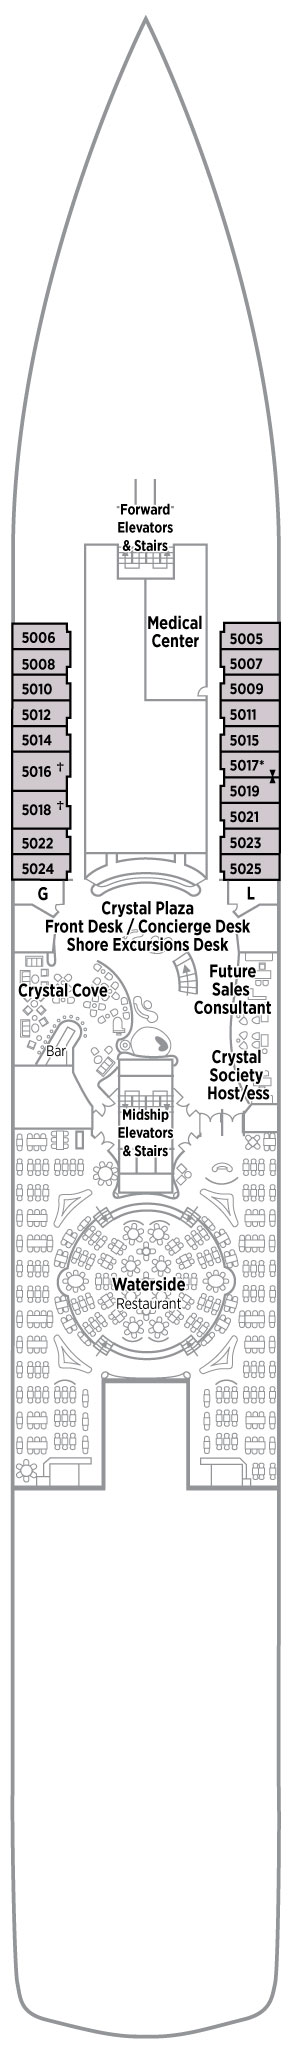 Deck 5 - Crystal